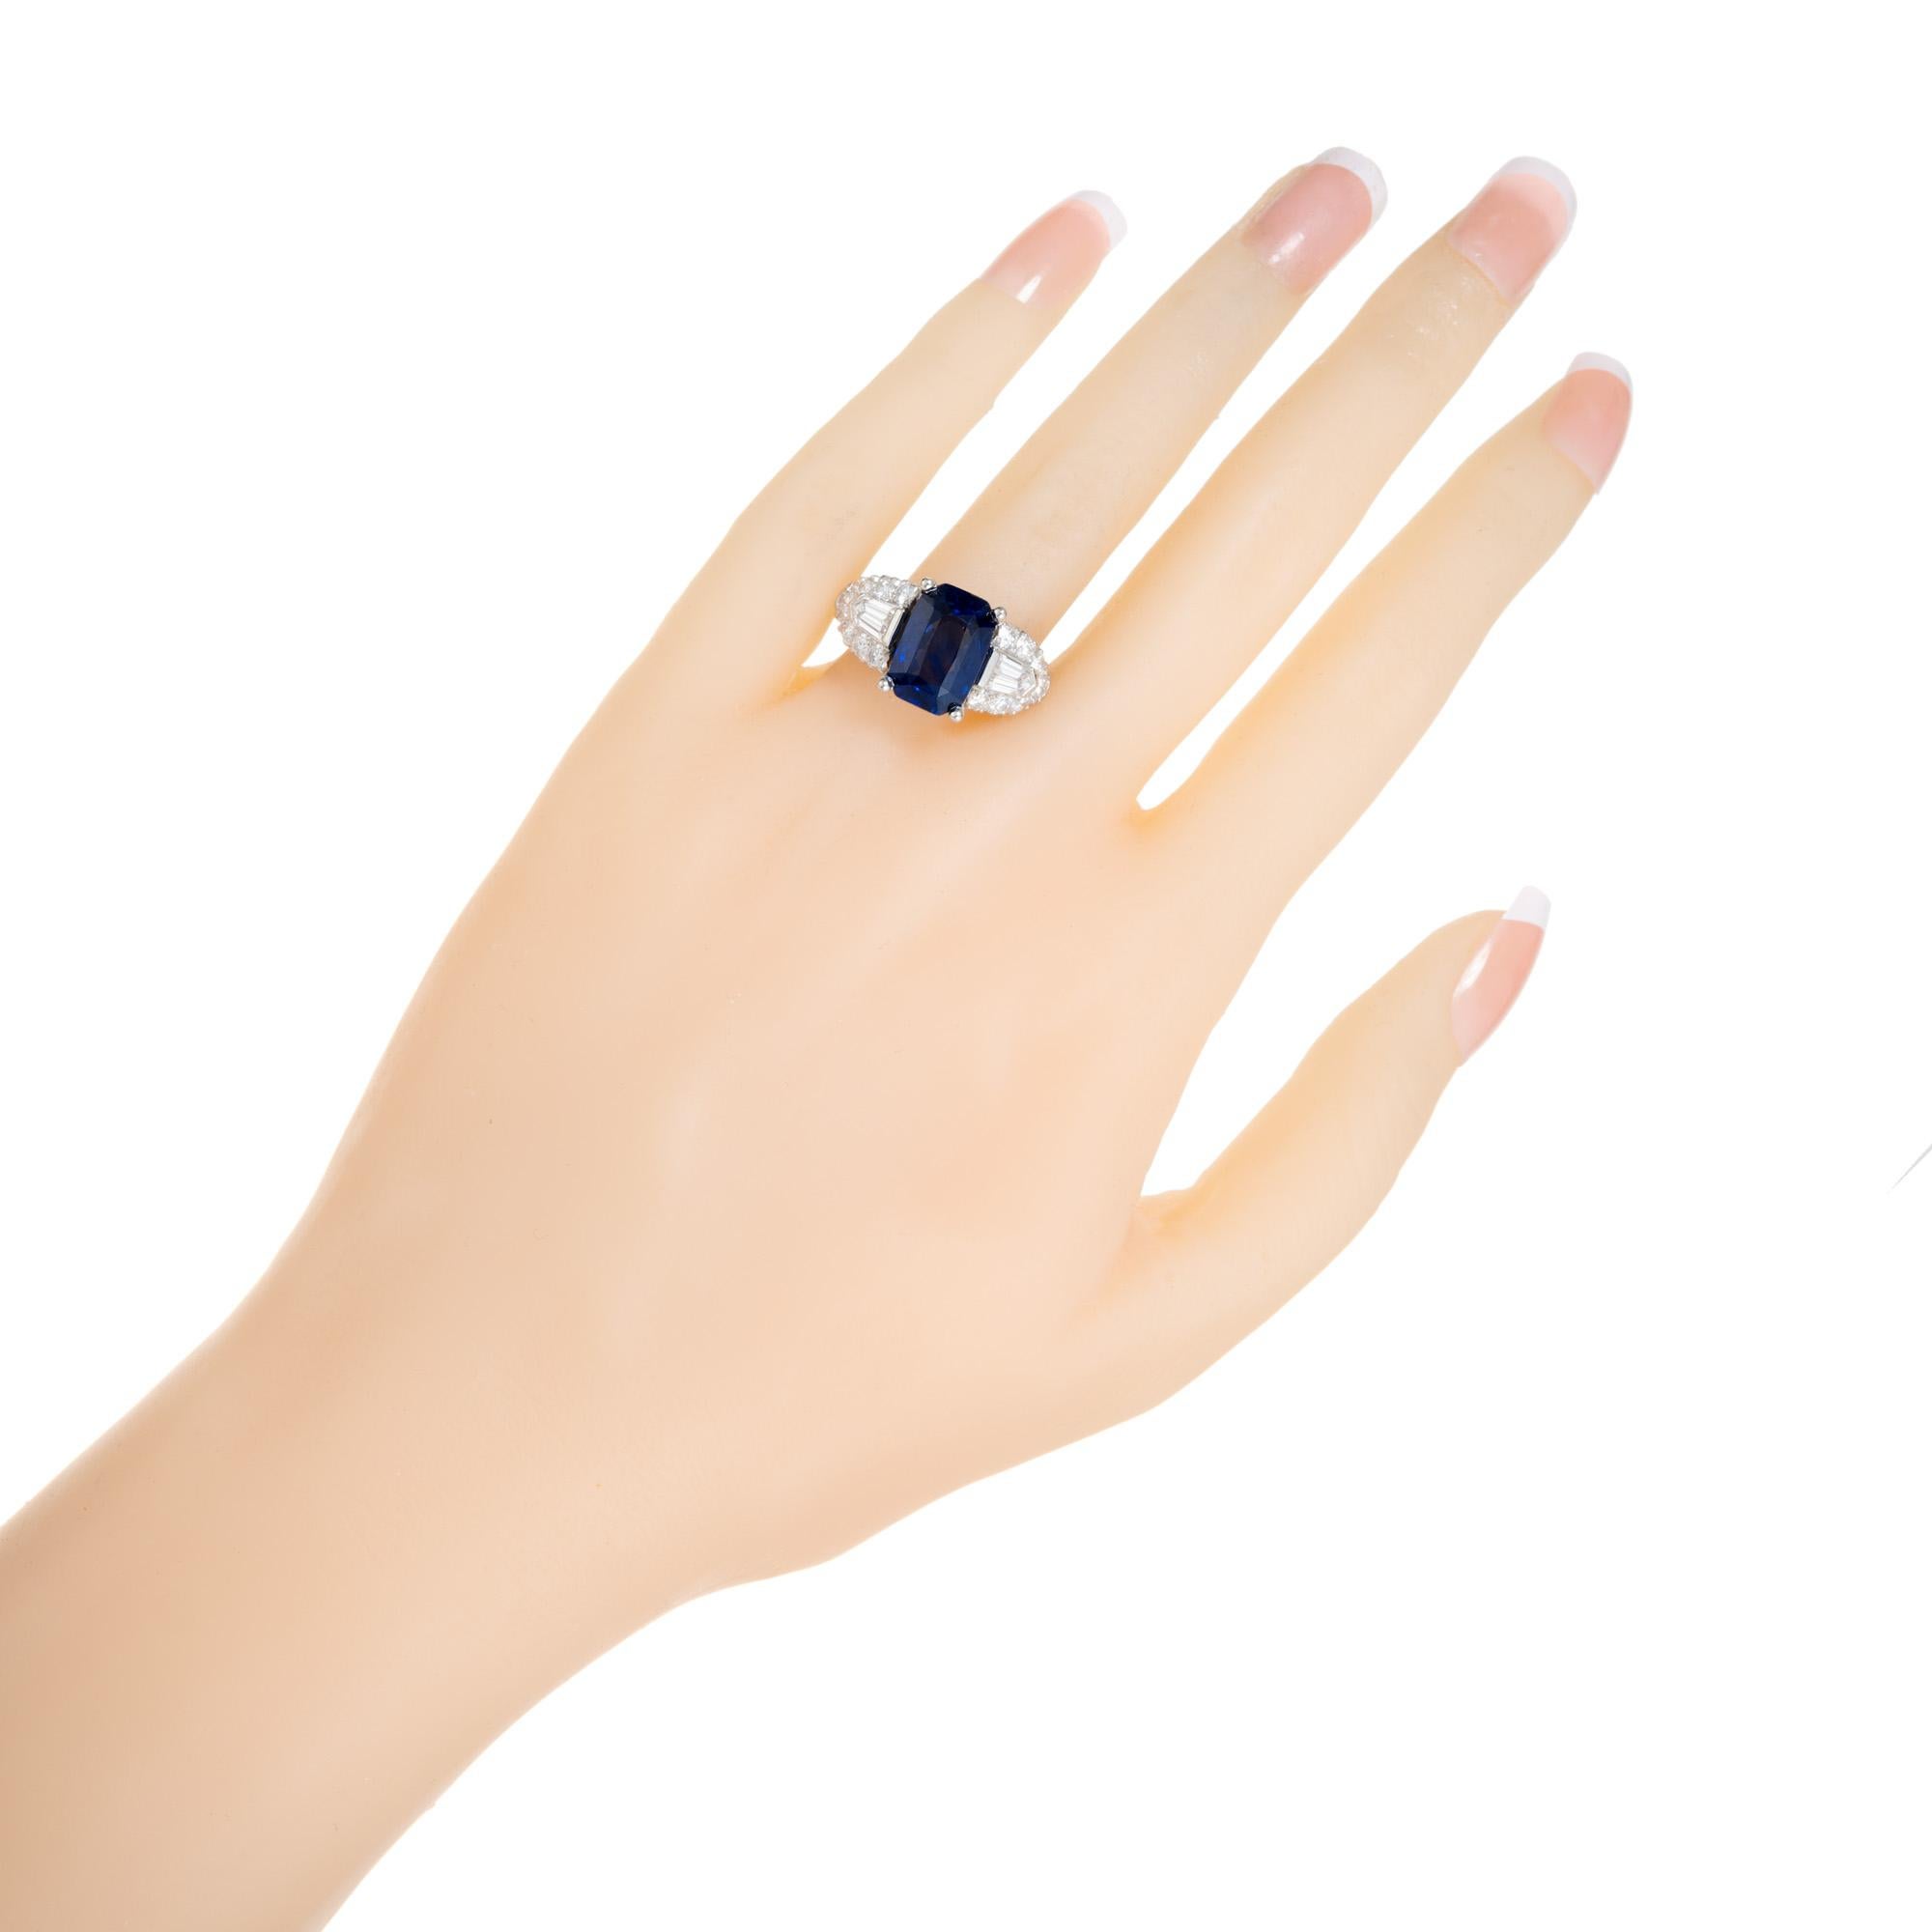 5.28 Carat Emerald Cut Sapphire Diamond Art Deco Platinum Engagement Ring For Sale 1